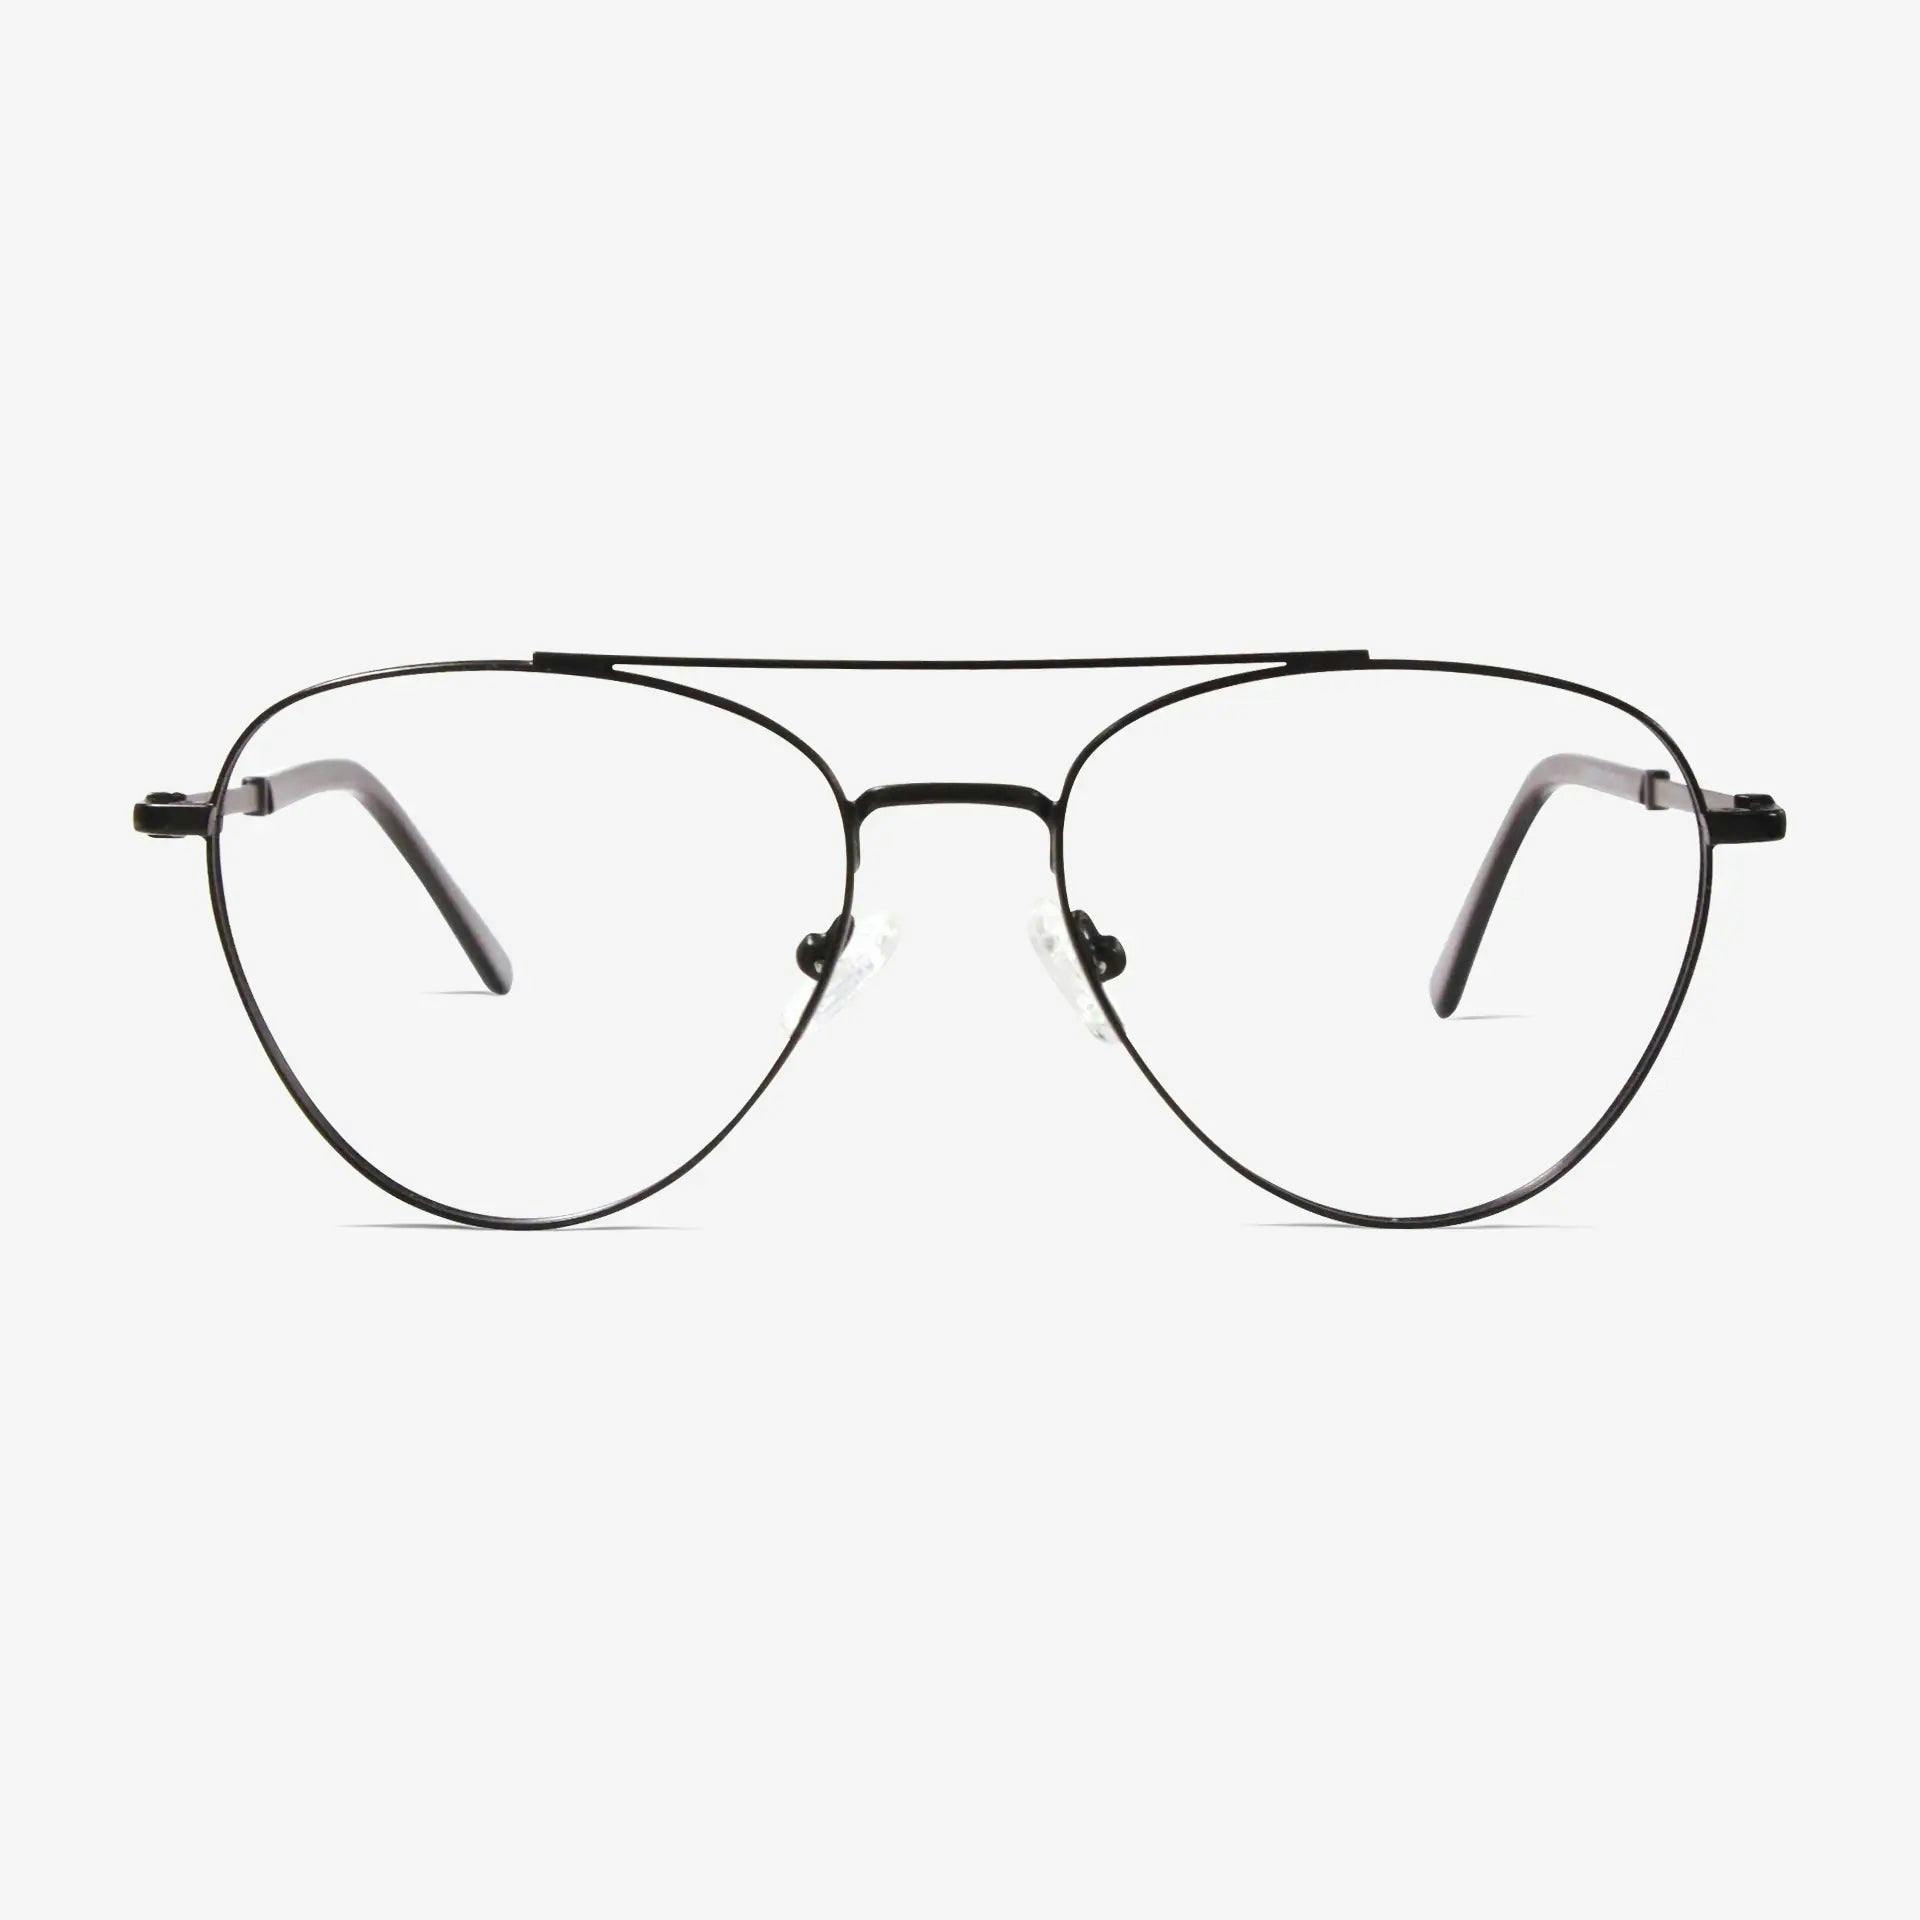 Huxley glasses | Prop Midnight 